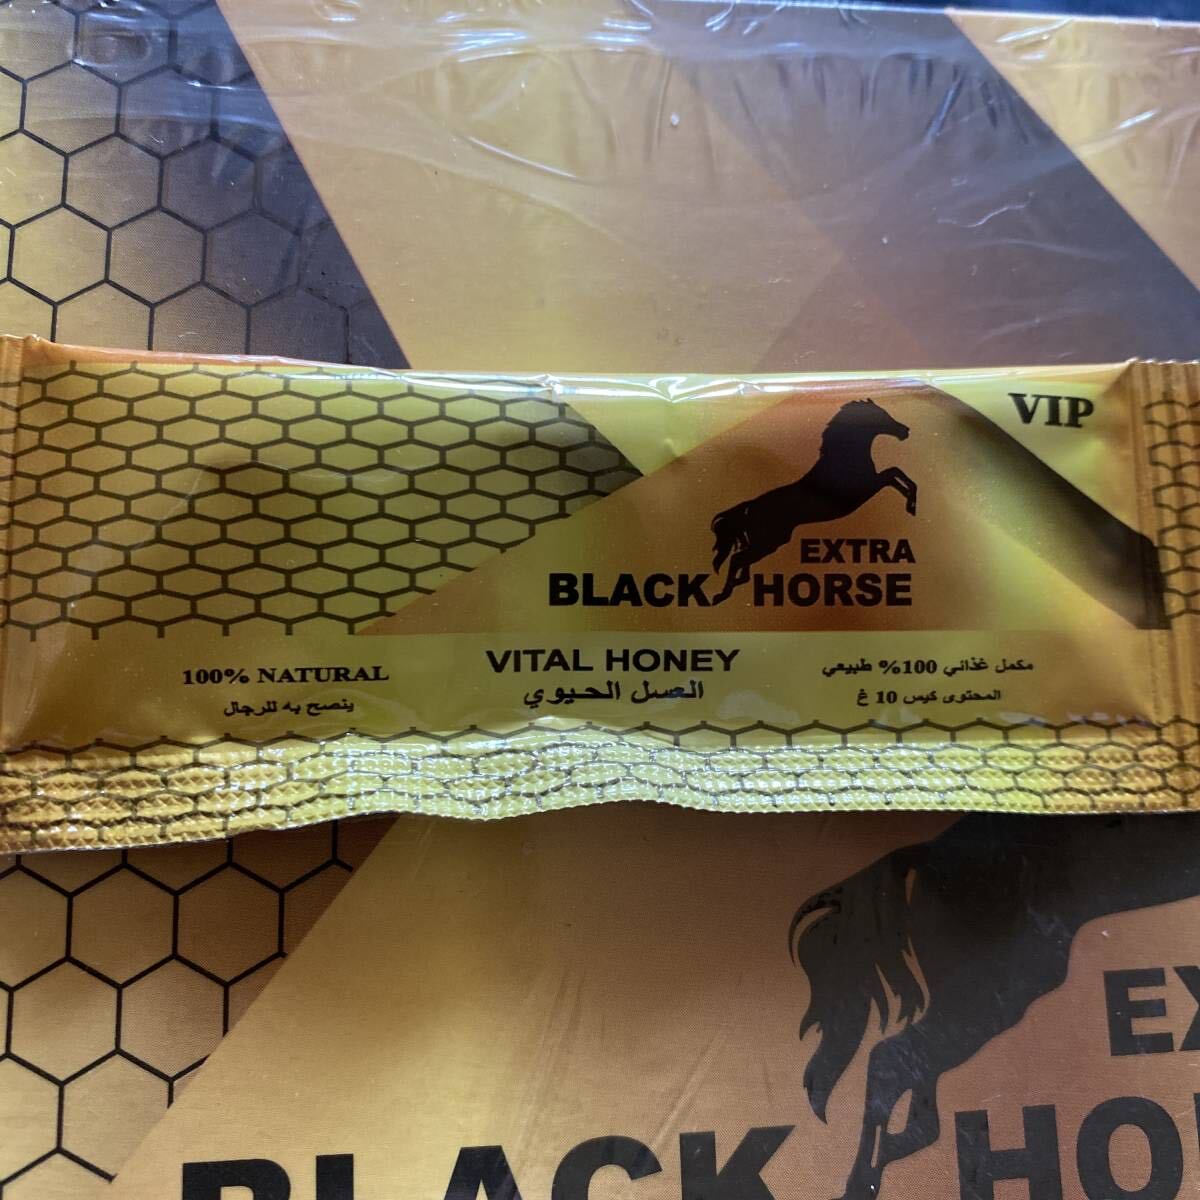  black hose Gold VIP 1 box 48 sack box attaching Royal honey VIP